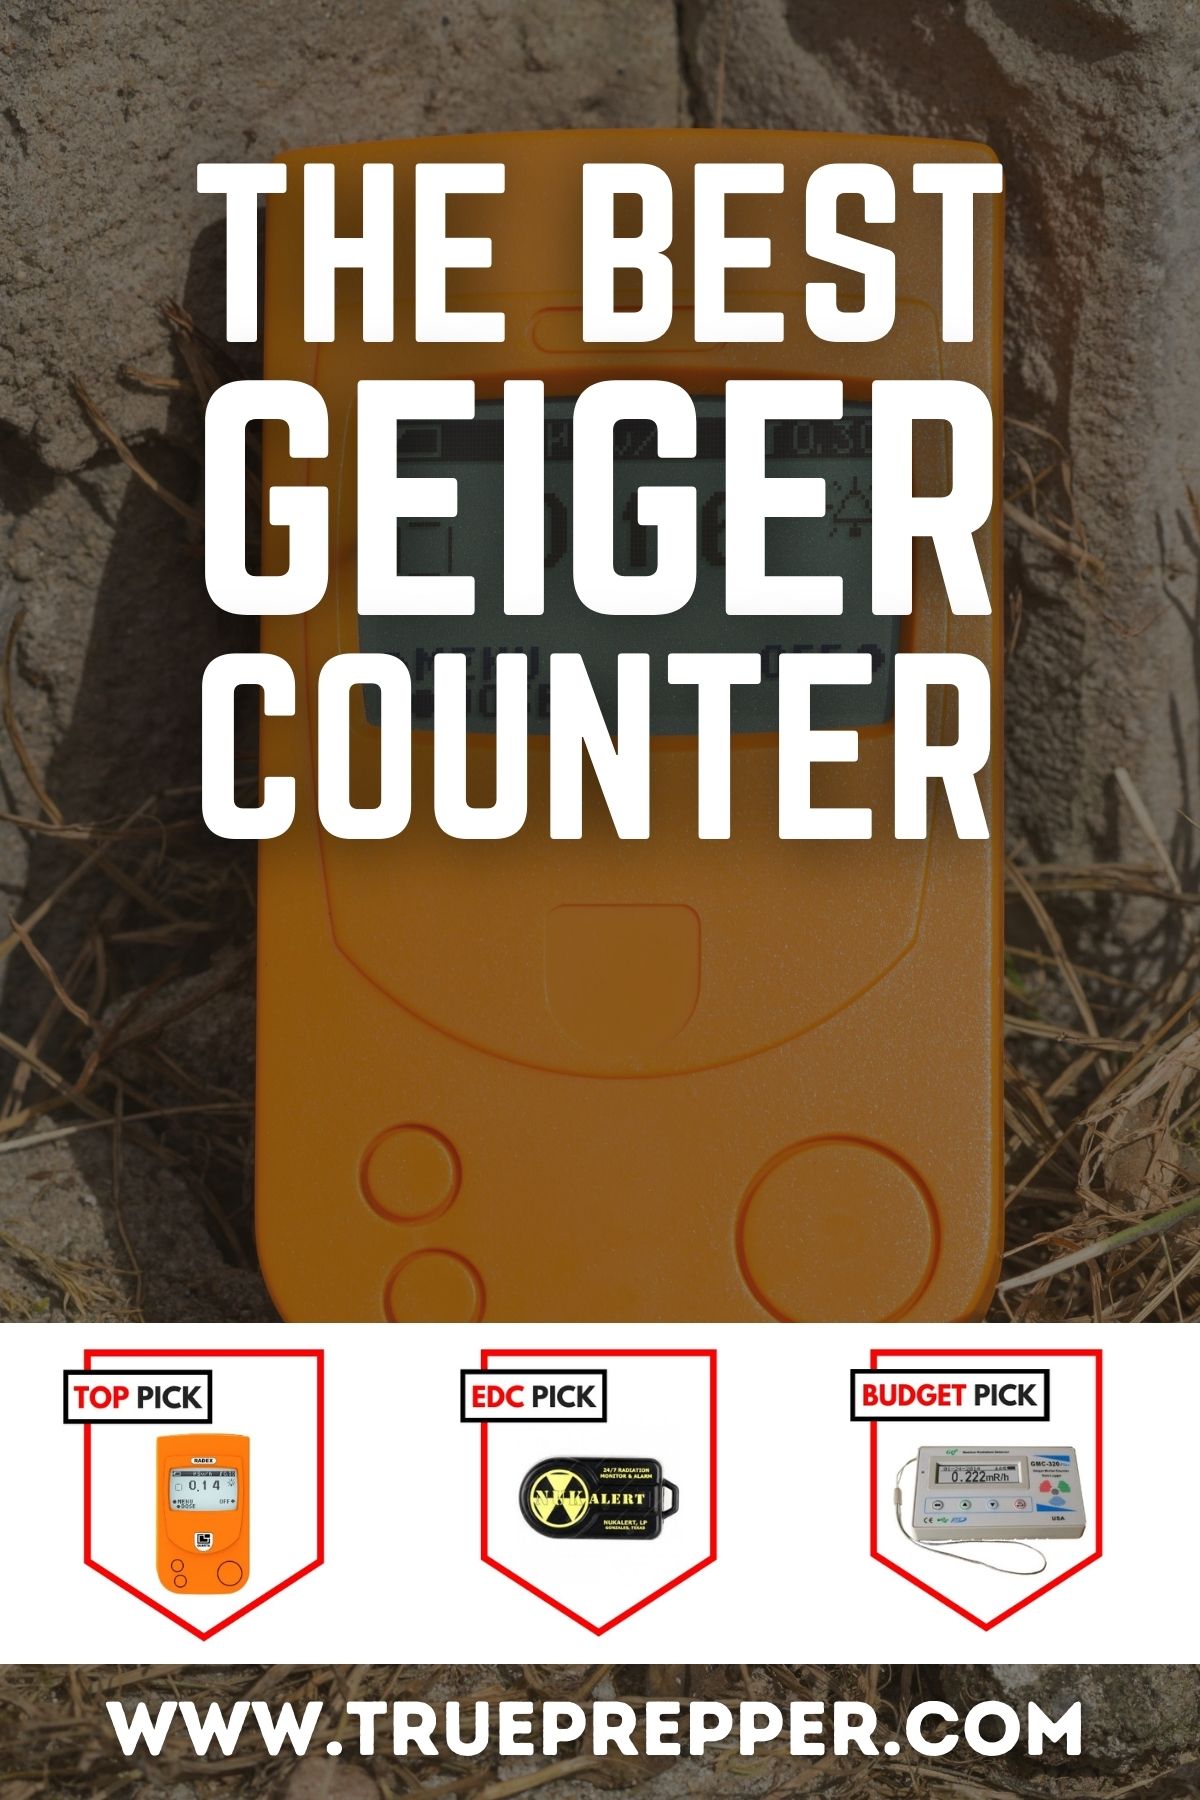 The Best Geiger Counter